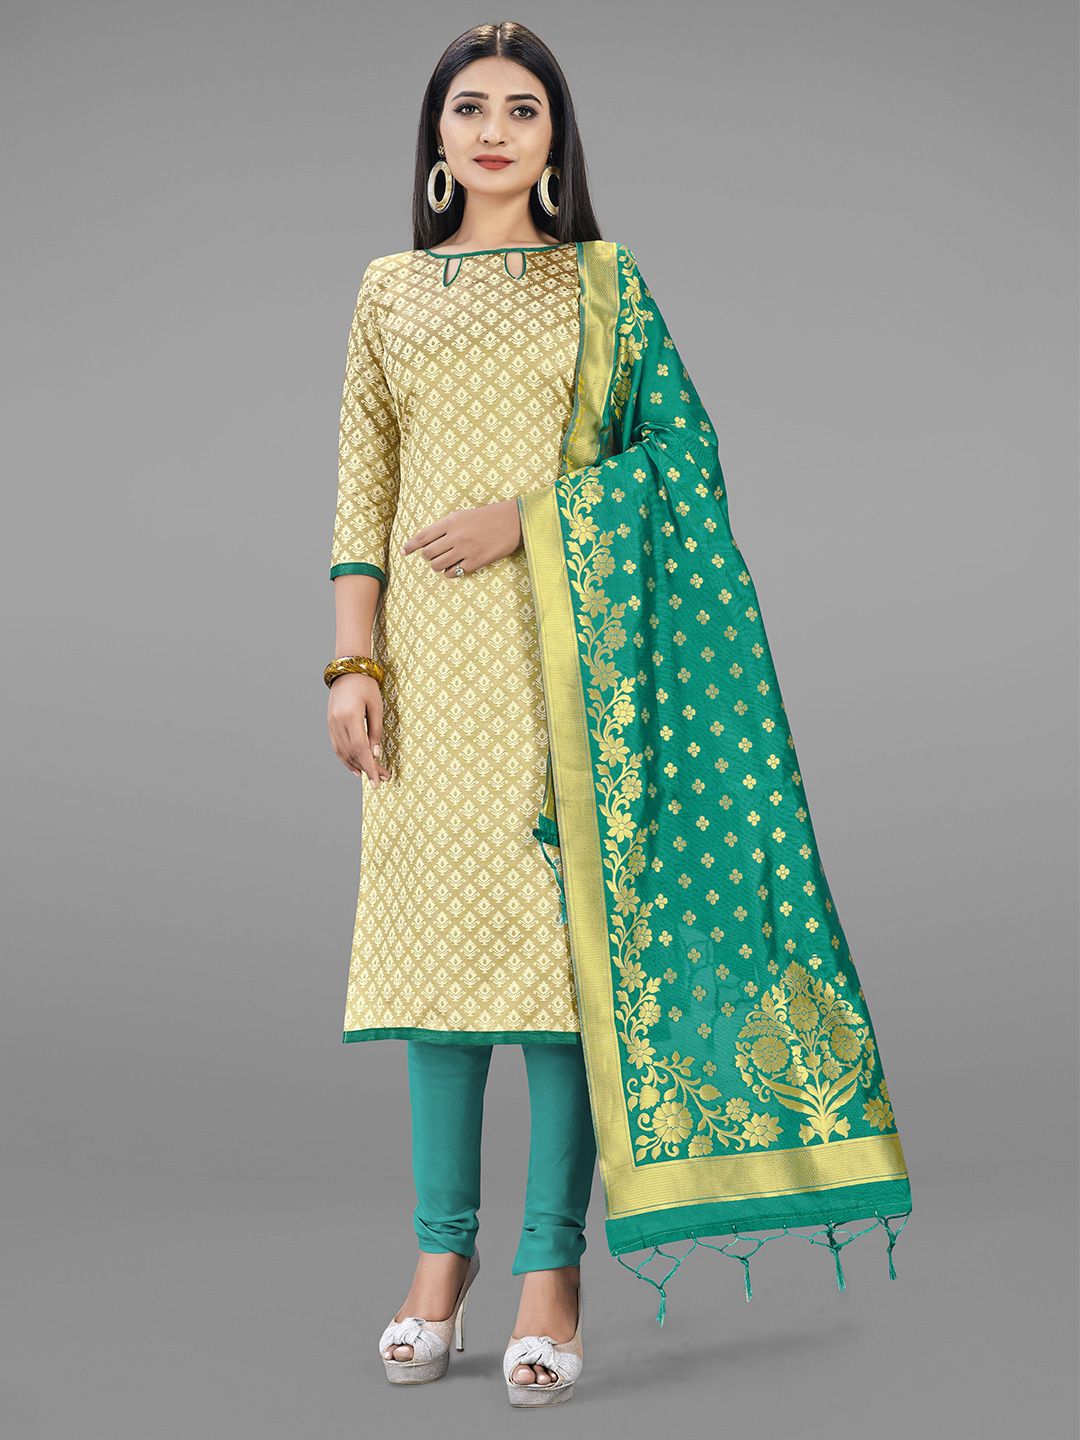 Mitera Cream-Coloured & Green Unstitched Dress Material Price in India